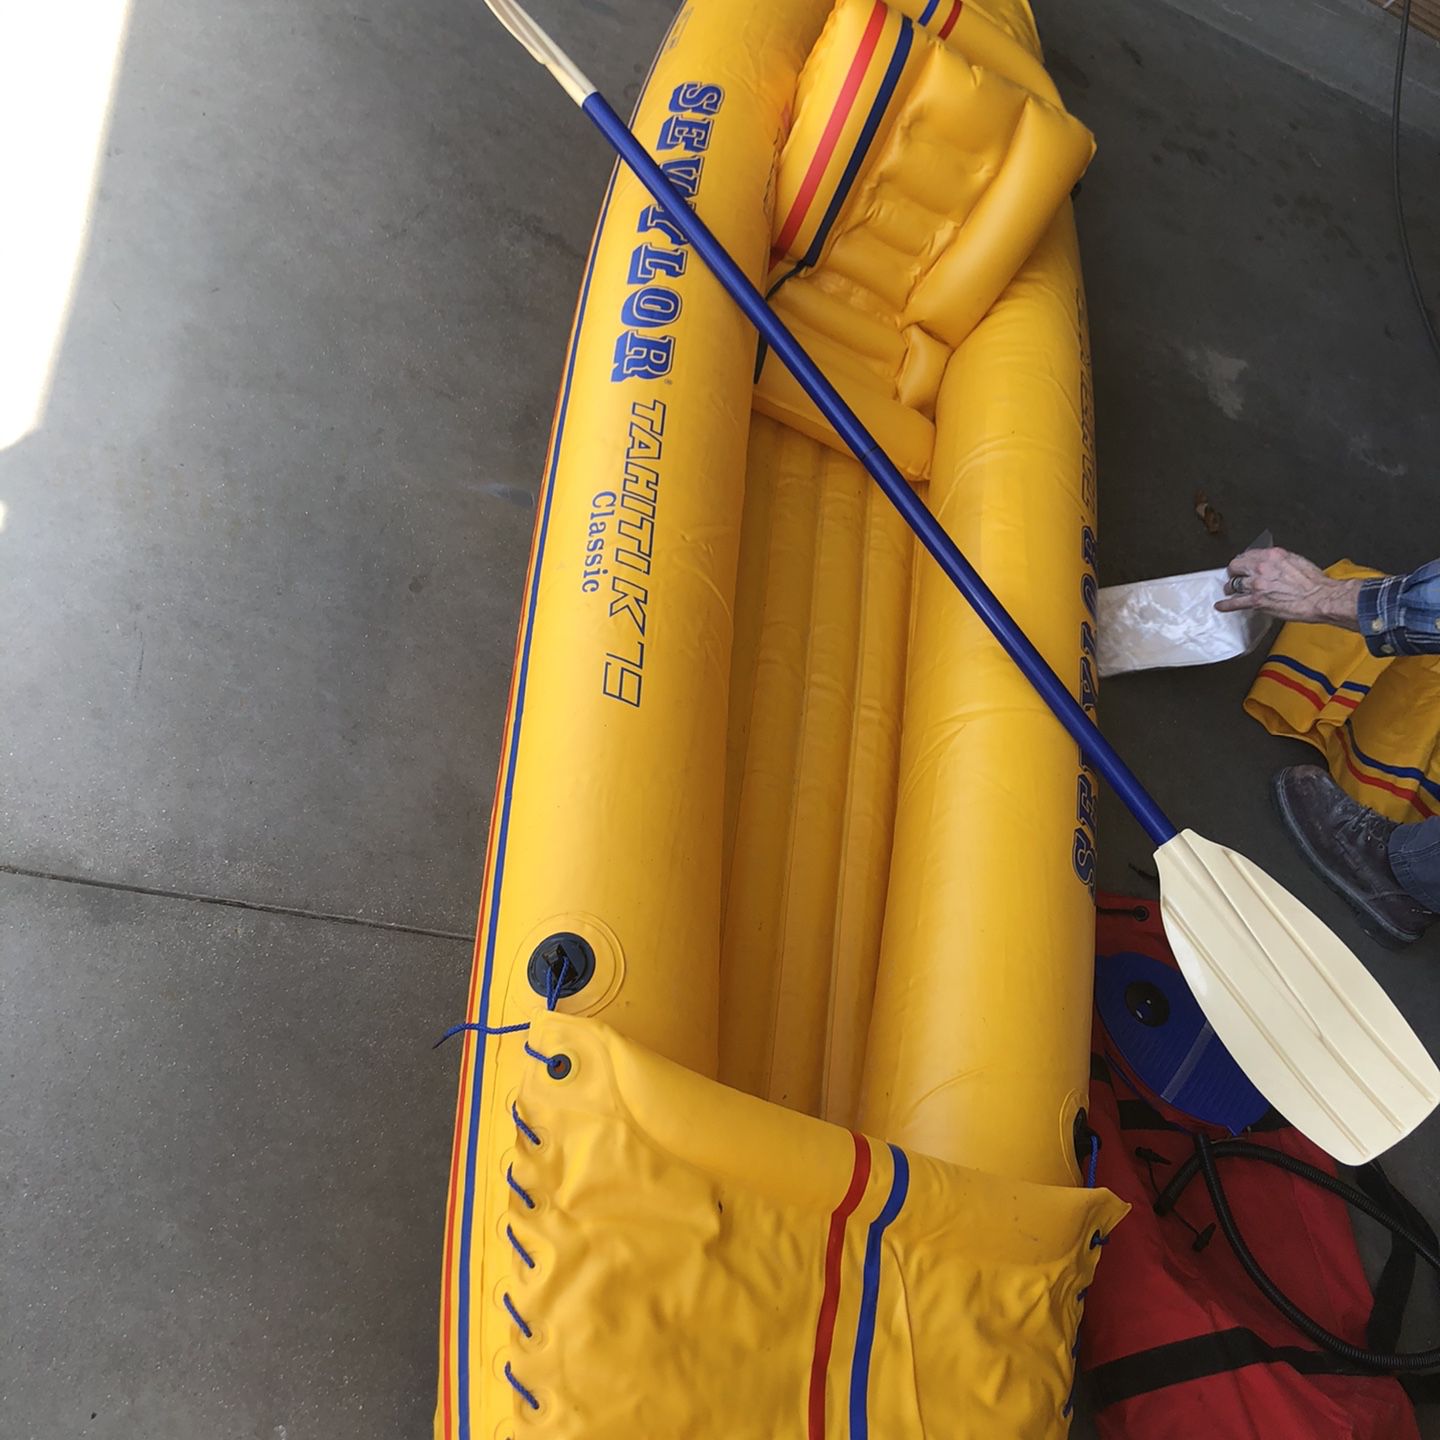 Sevylor Tahiti Brand new K79 Classic Inflatable 2-Person Kayak w/ Oars EUCNrand New